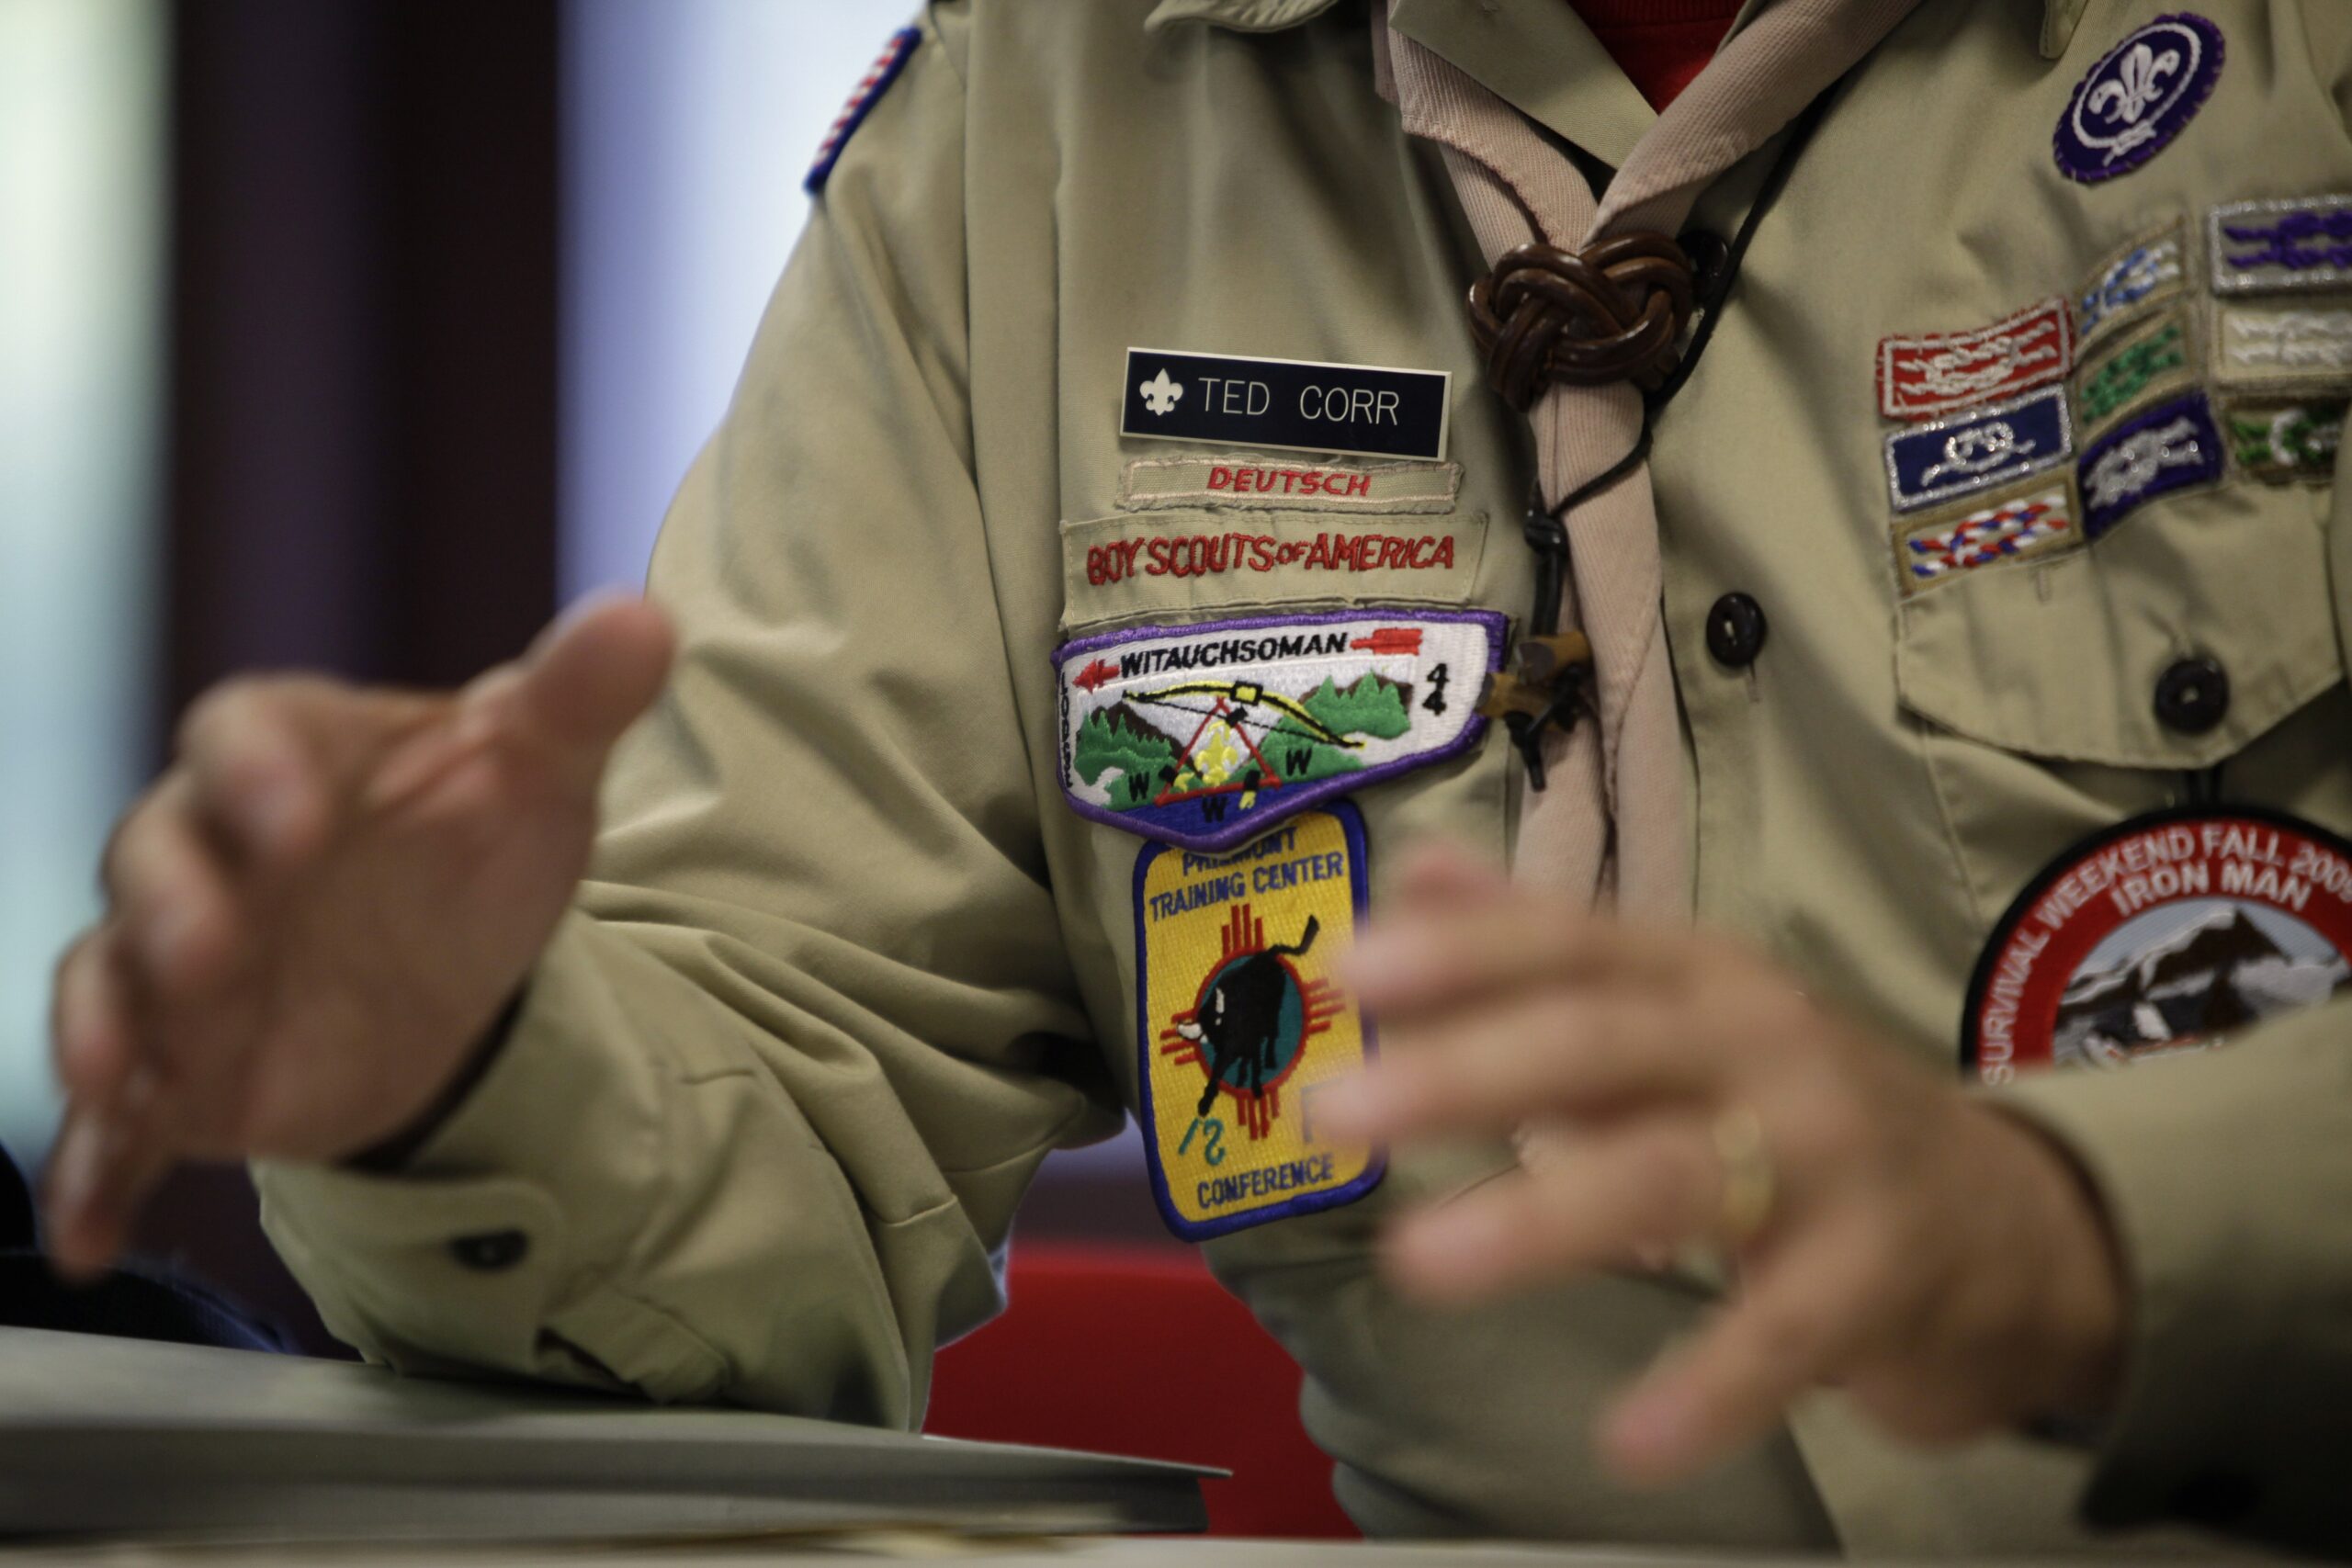 Boy Scouts of America Uniform